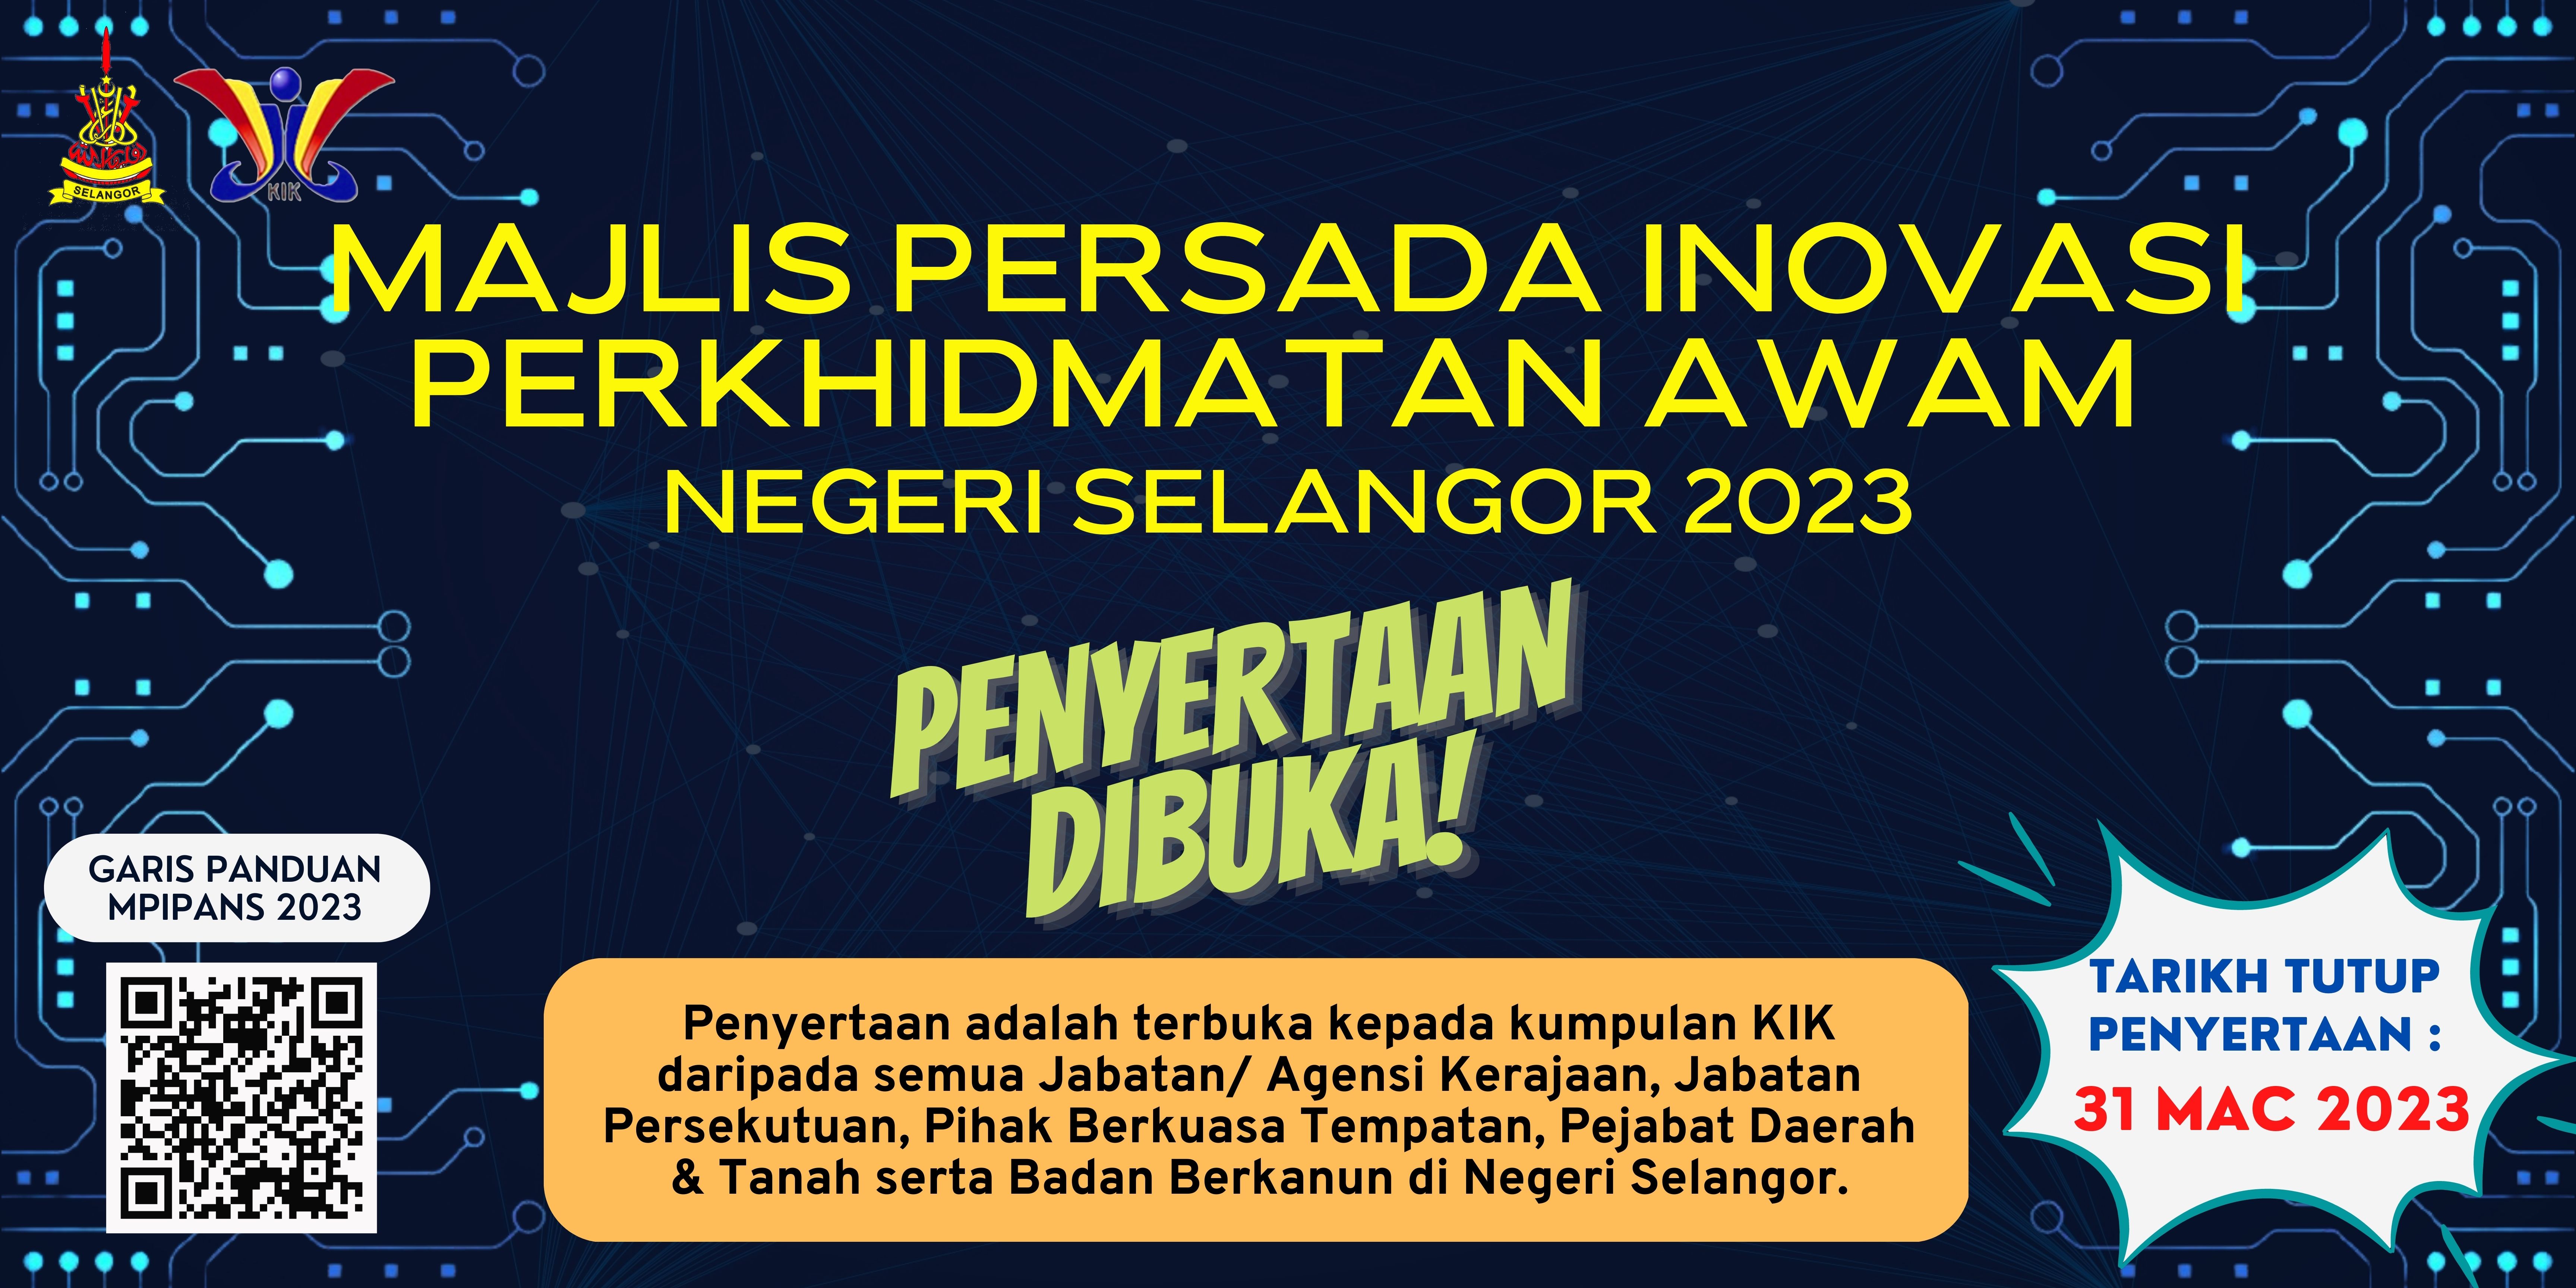 Majlis Persada Inovasi 2023